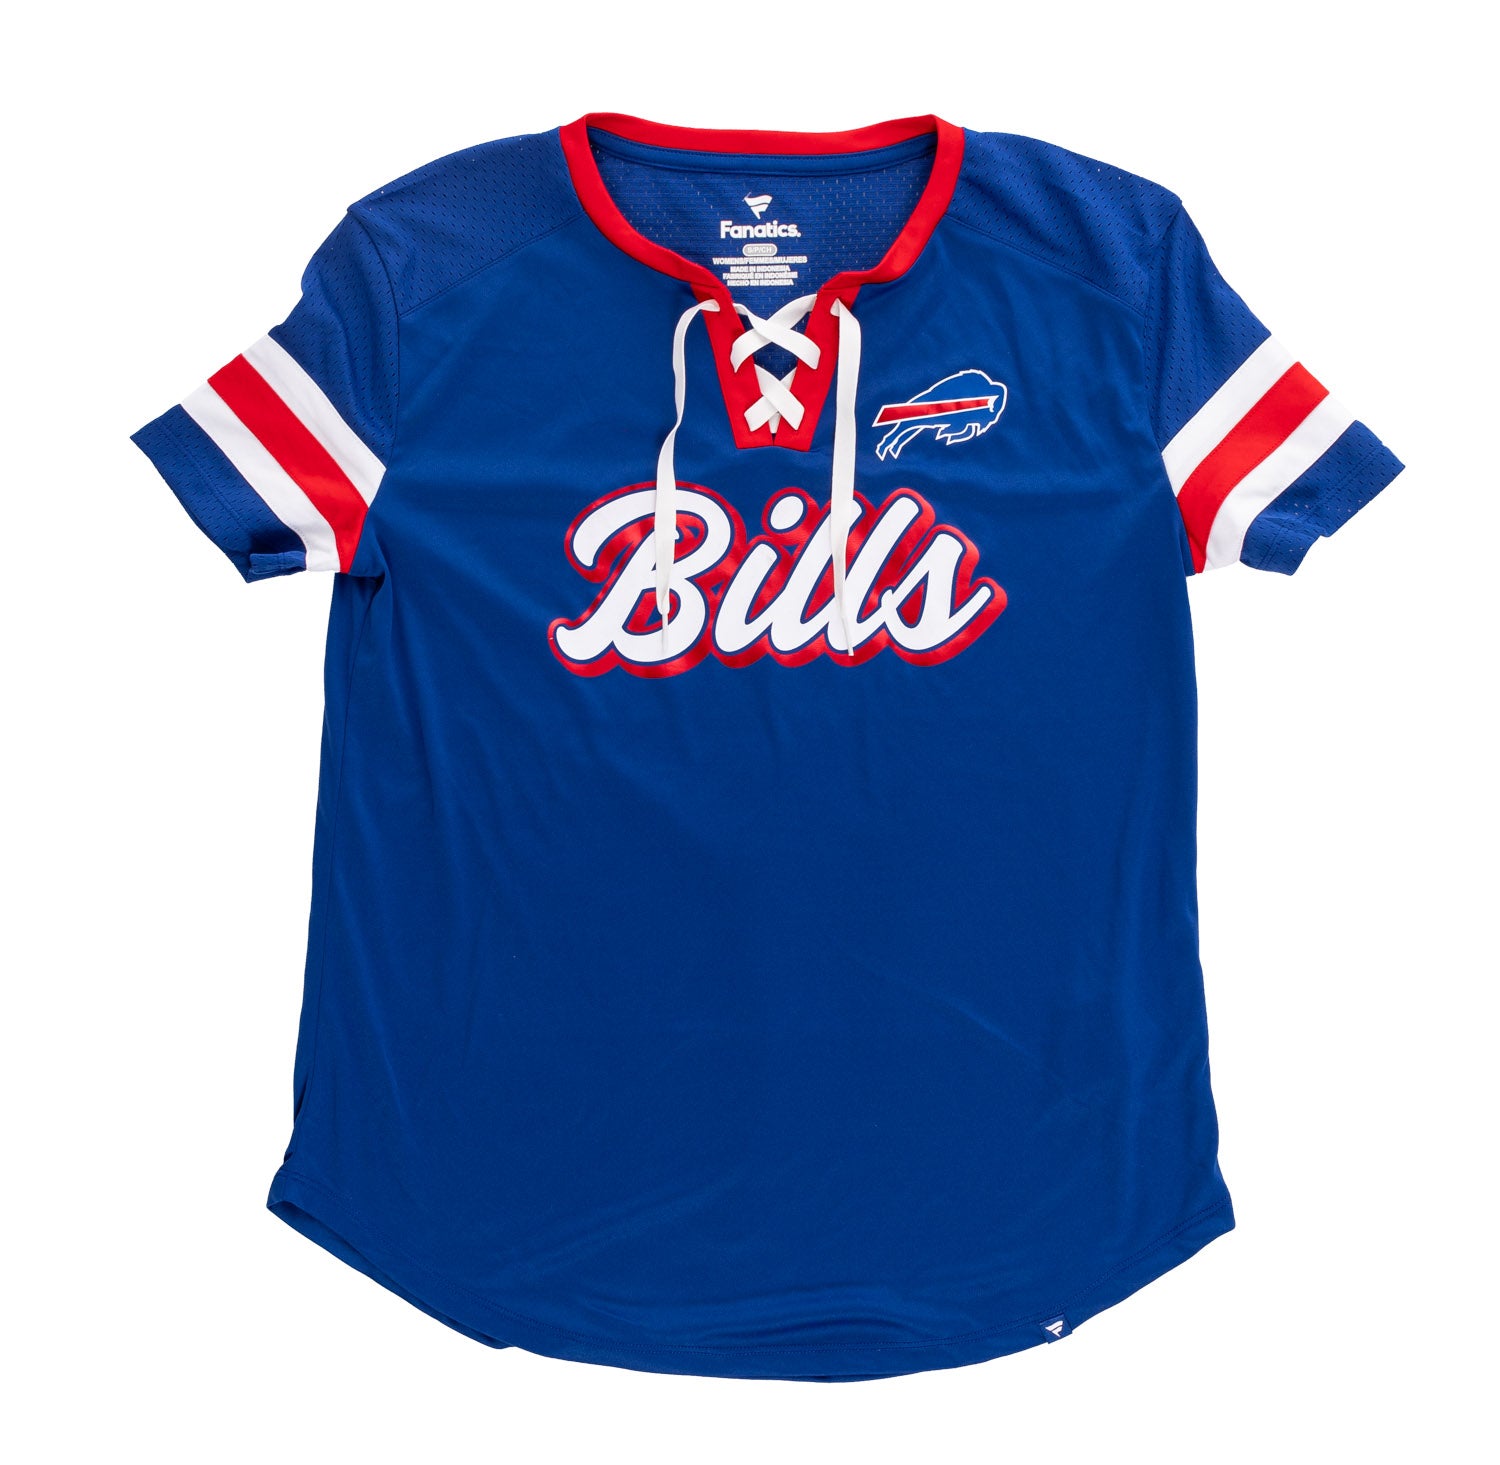 Buffalo Bills Top, Distressed Top, Nfl Womens Clothing, Nfl Fashion,  Recycled Top, Bills Top, Football Gear, Sportswear 